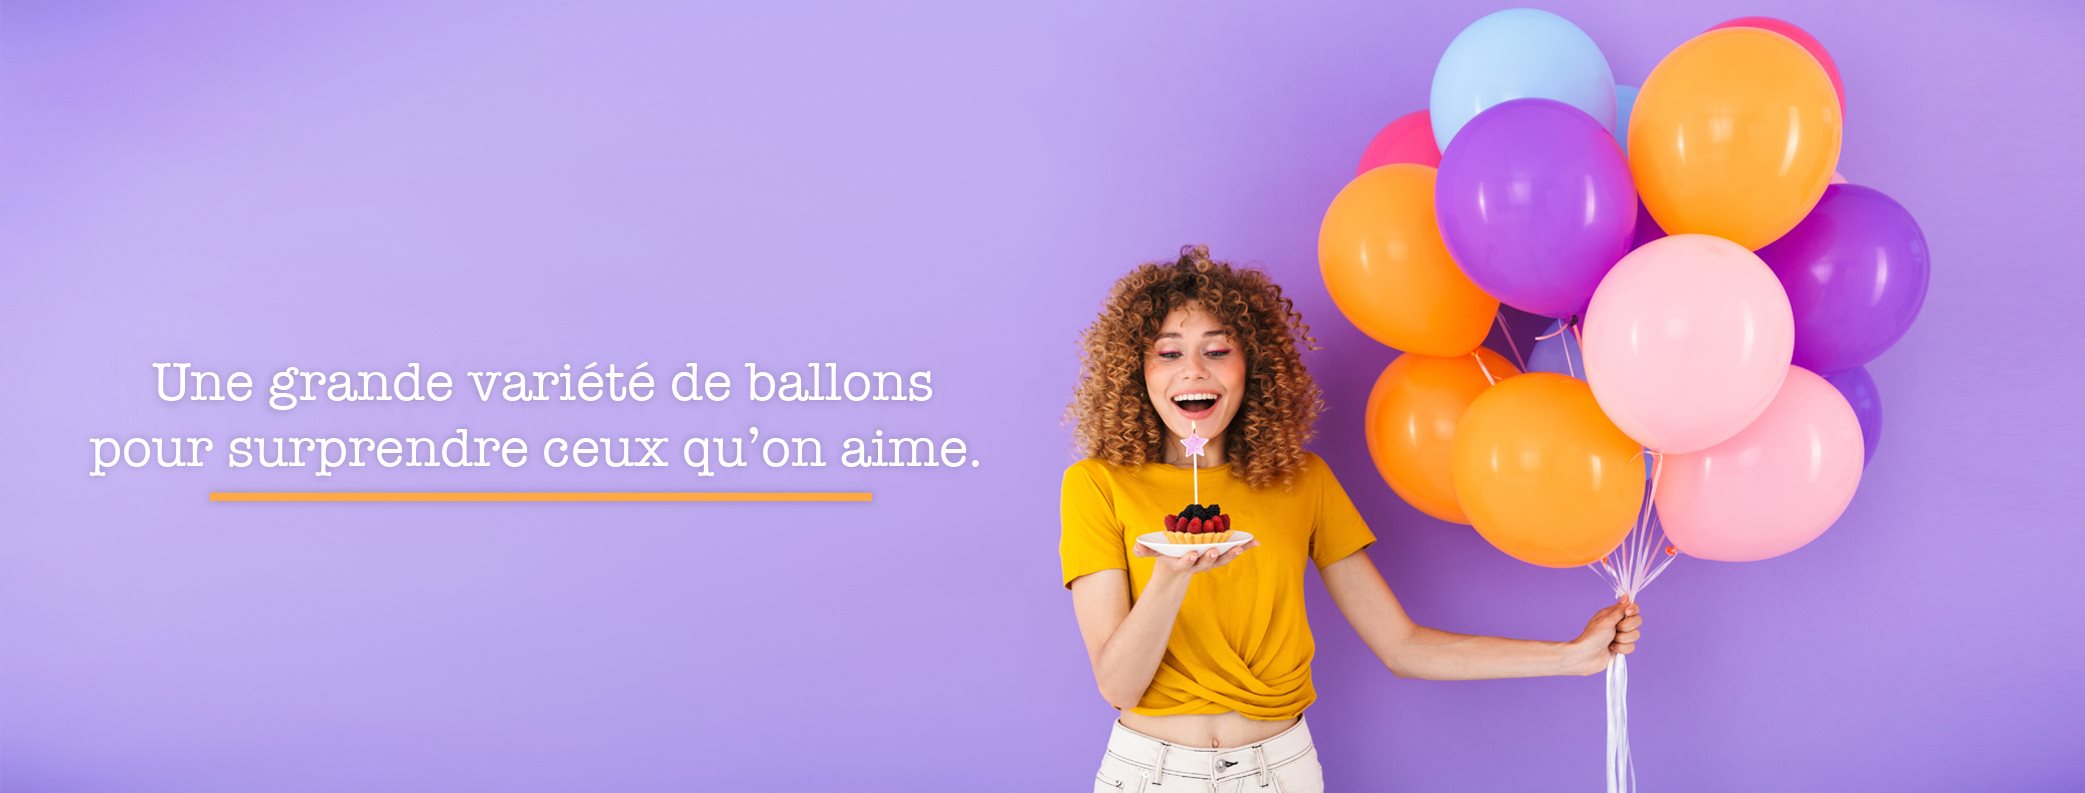 Banniere_ballon_generale_fr